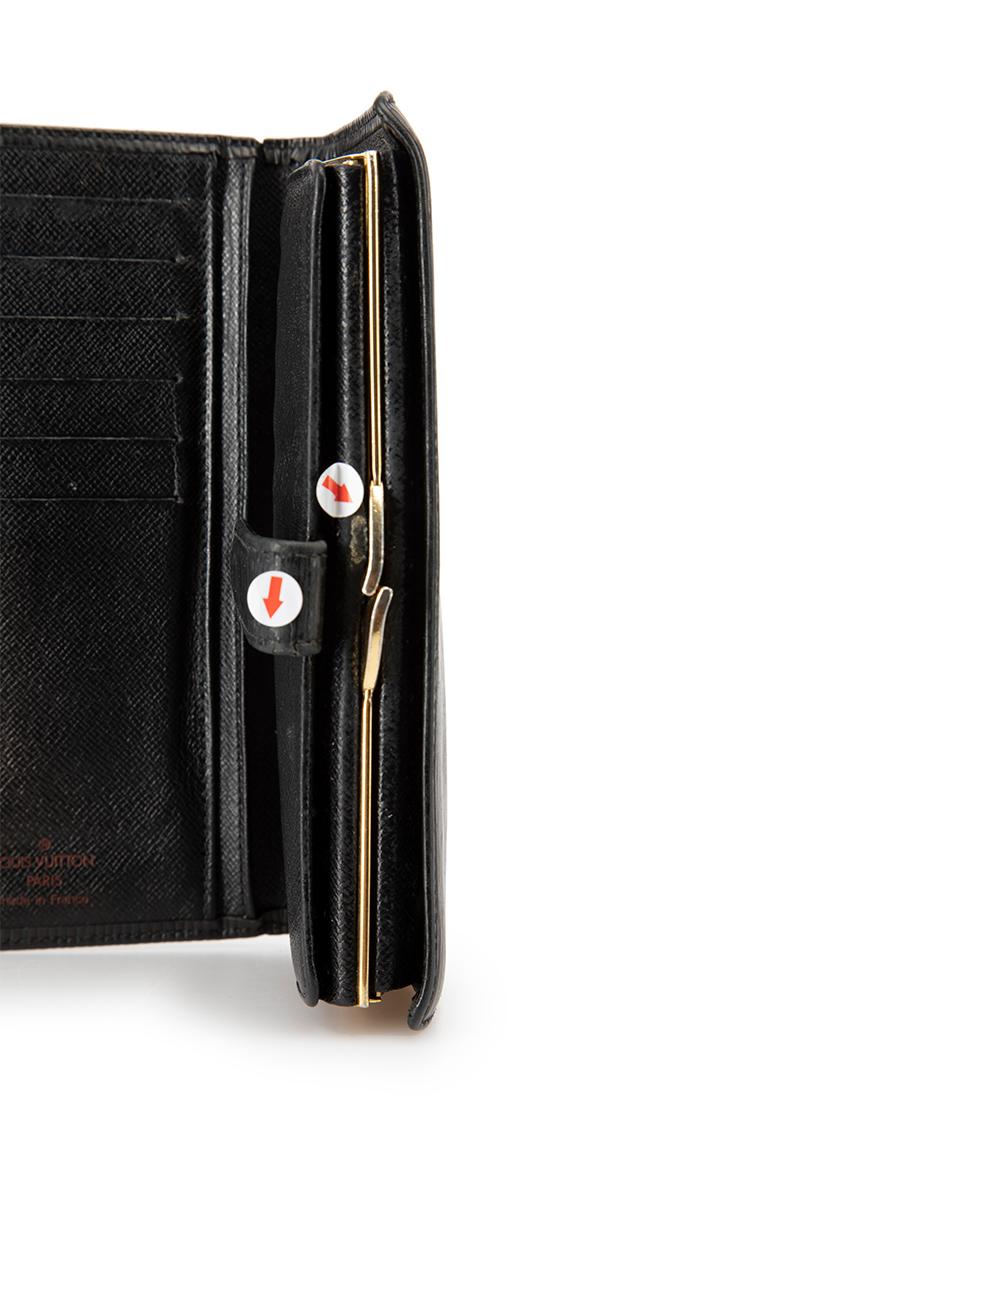 Louis Vuitton Women's Black Epi Leather French Purse Wallet 3